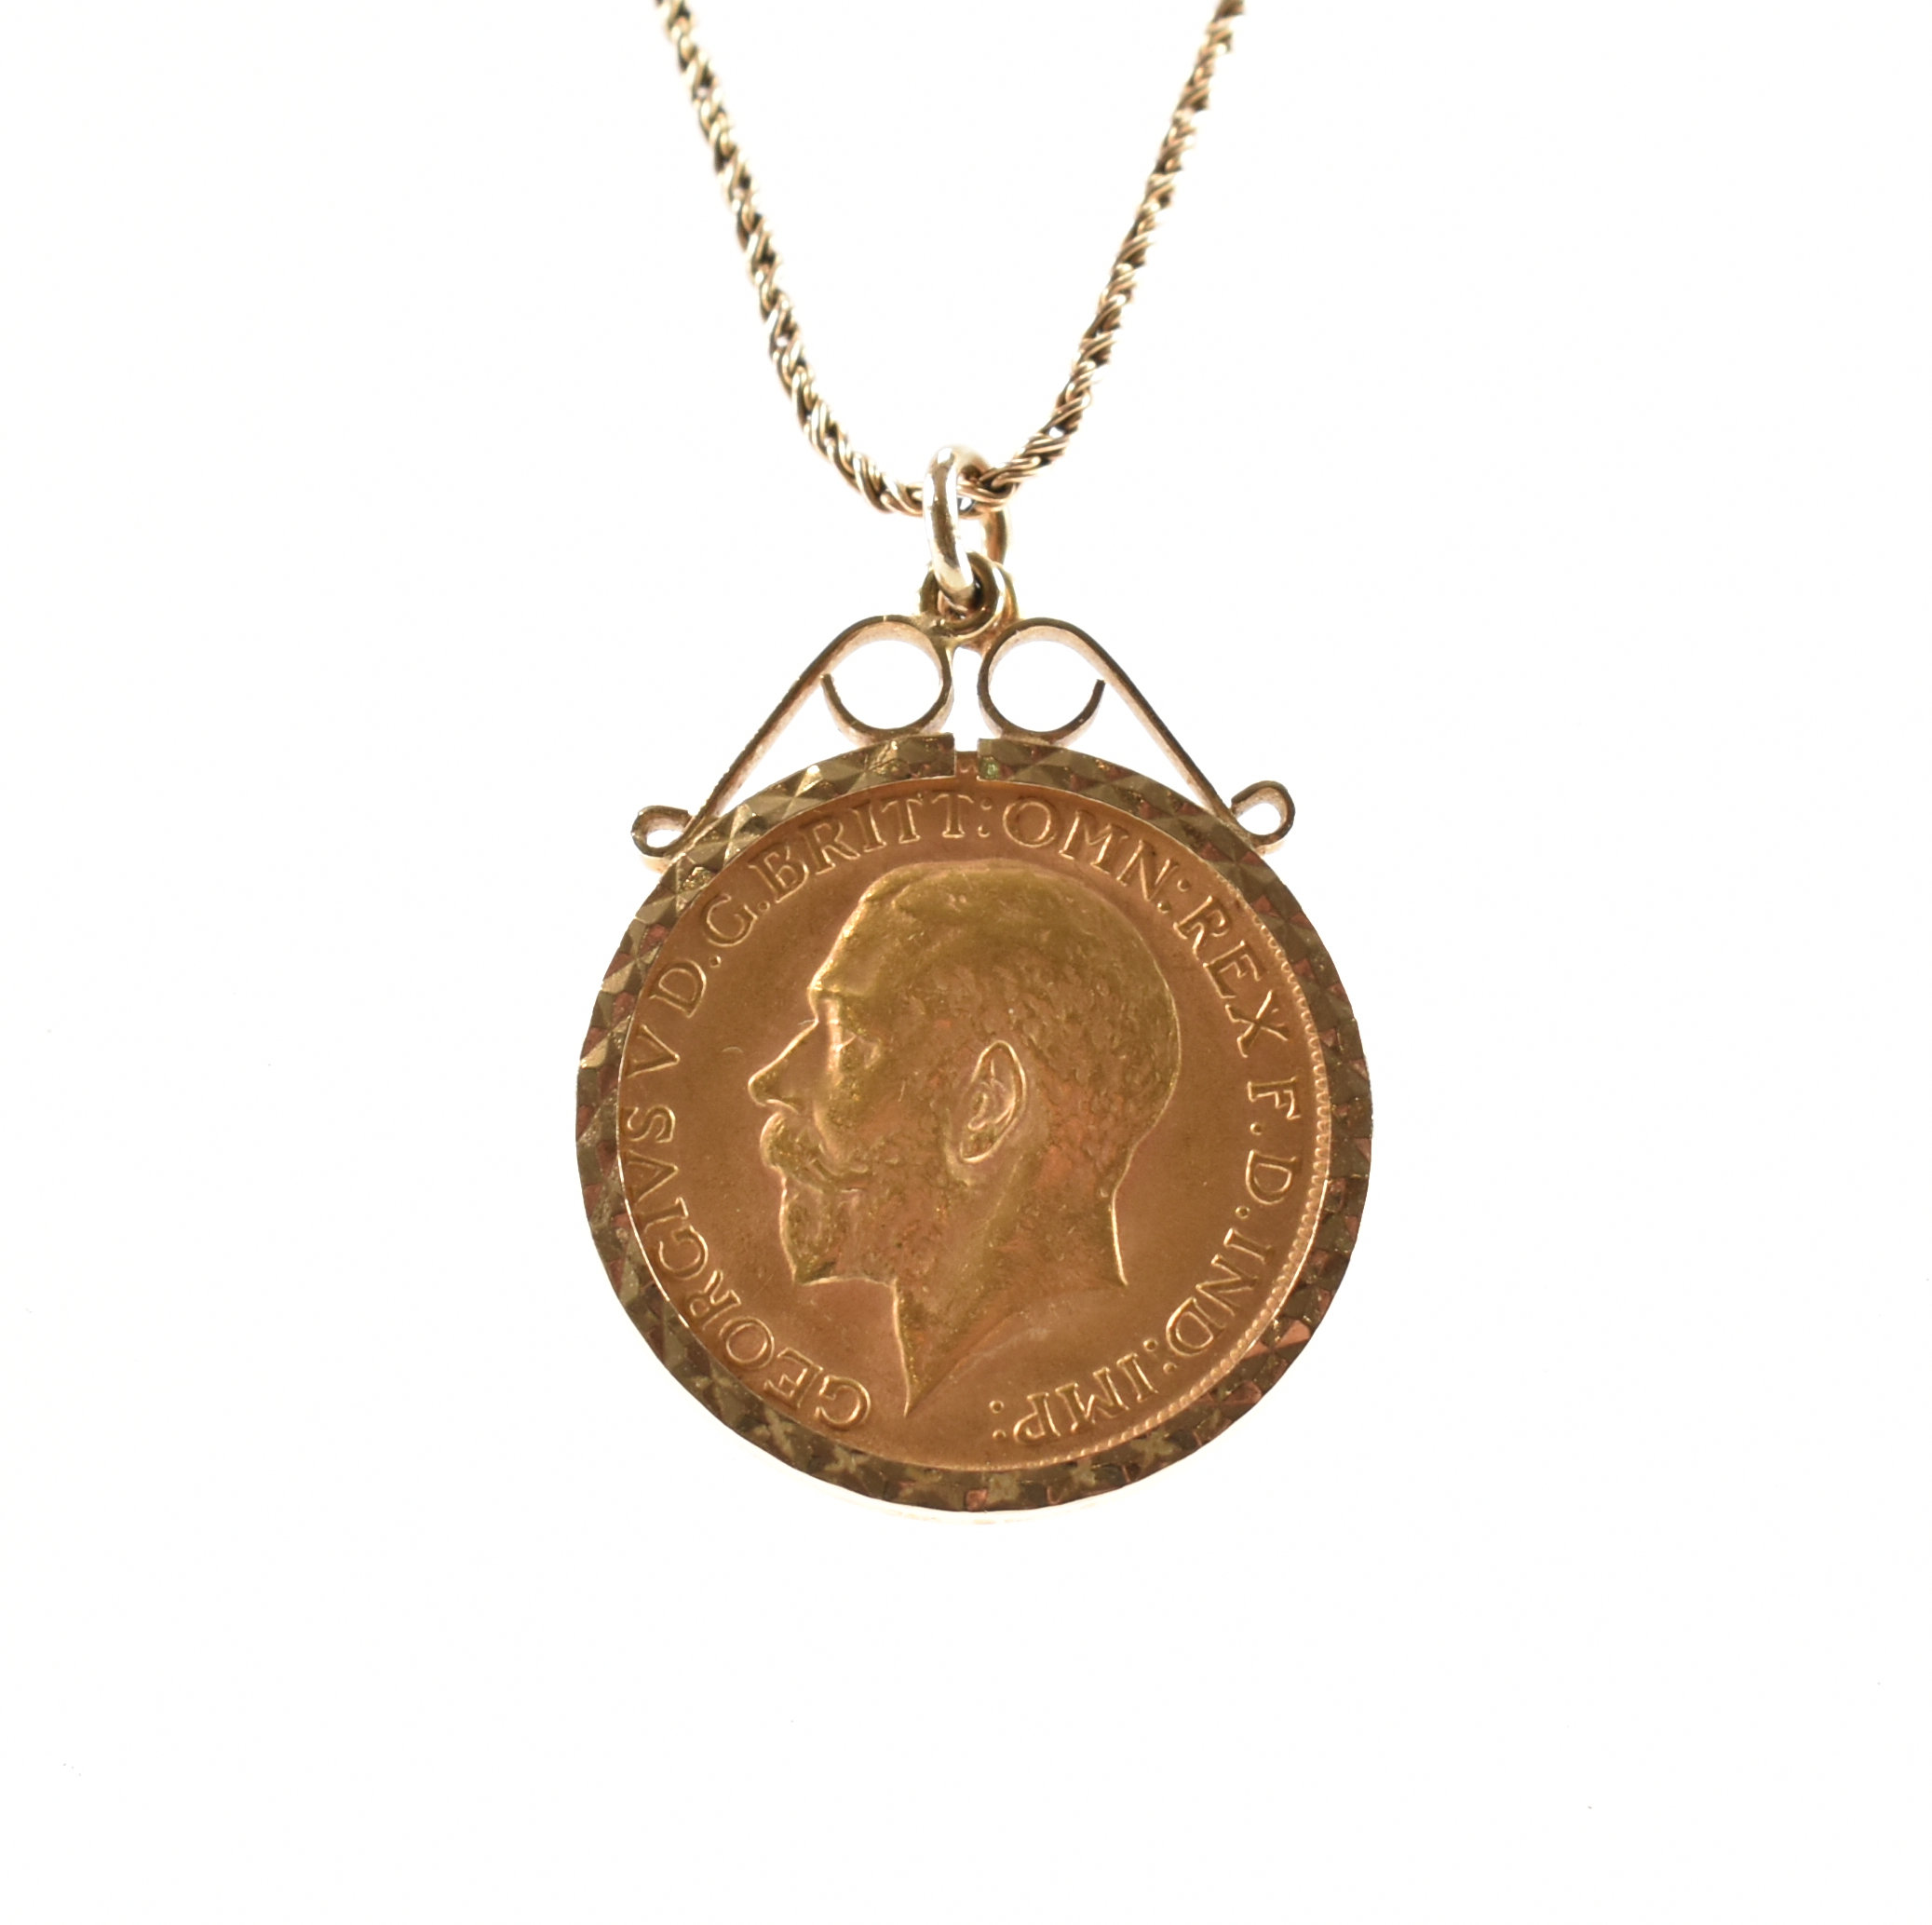 1912 SOVEREIGN COIN IN HALLMARKED 9CT GOLD MOUNT & CHAIN